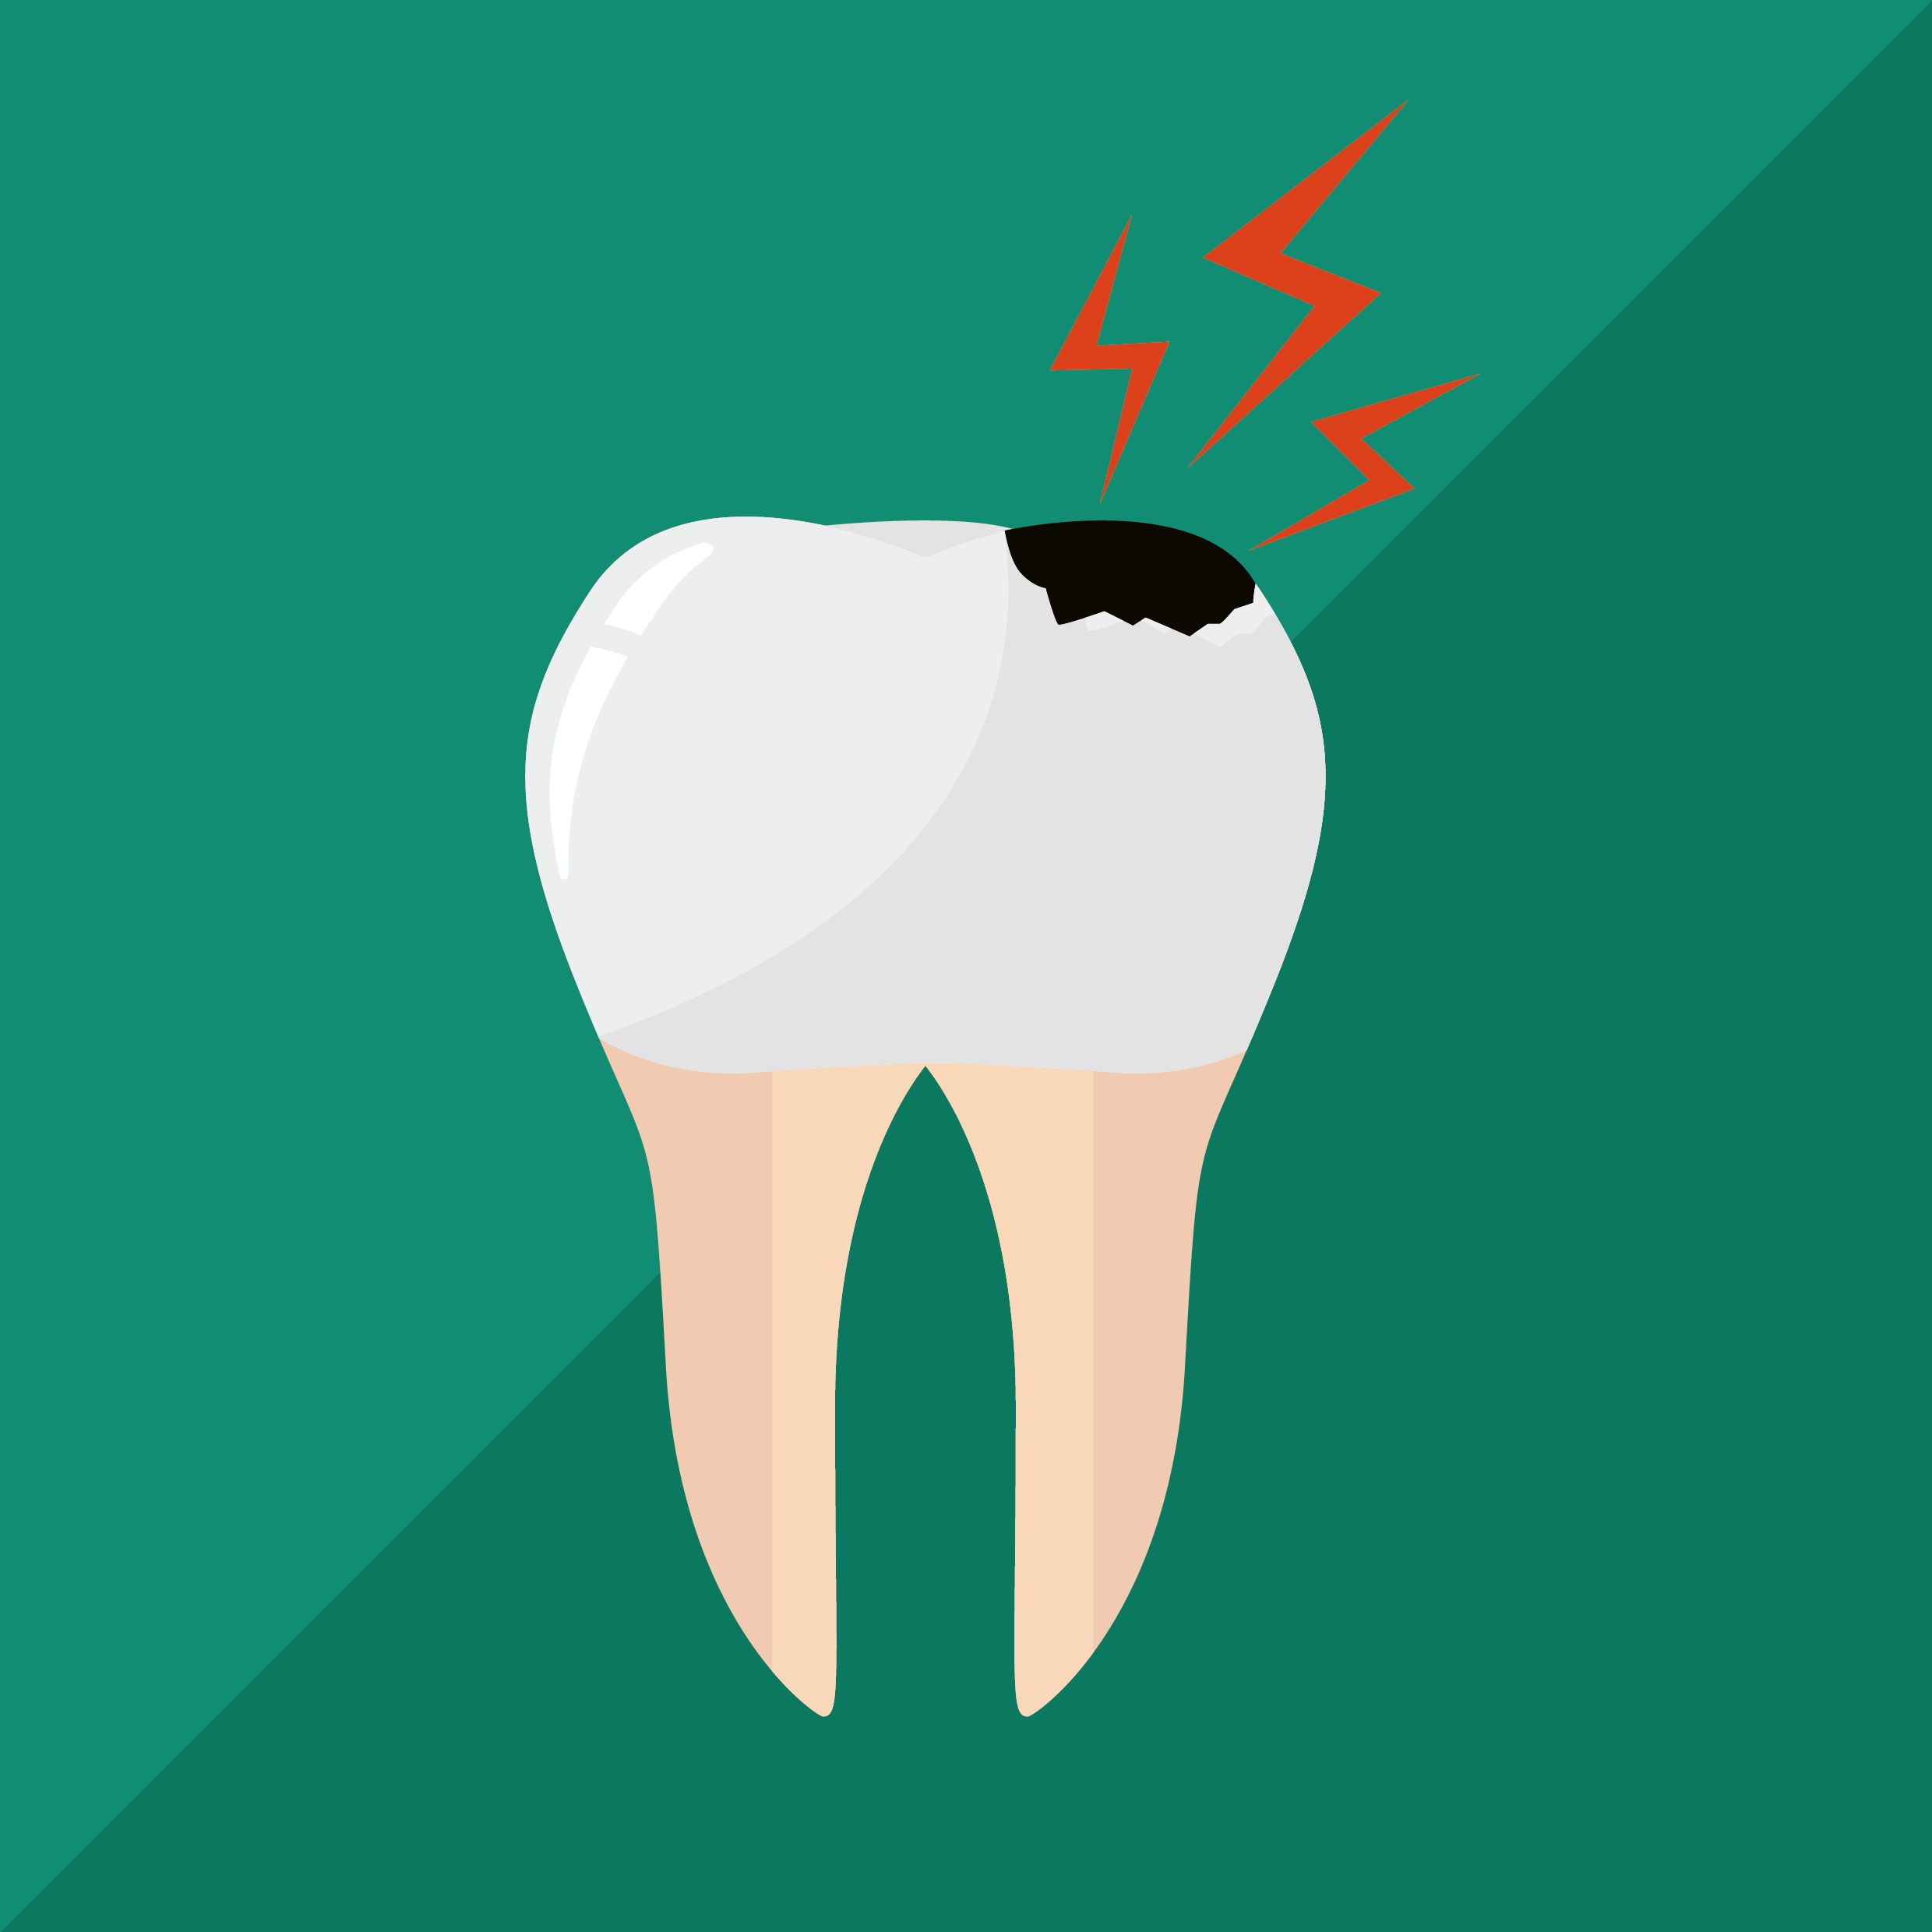 Wisdom Teeth Symptoms